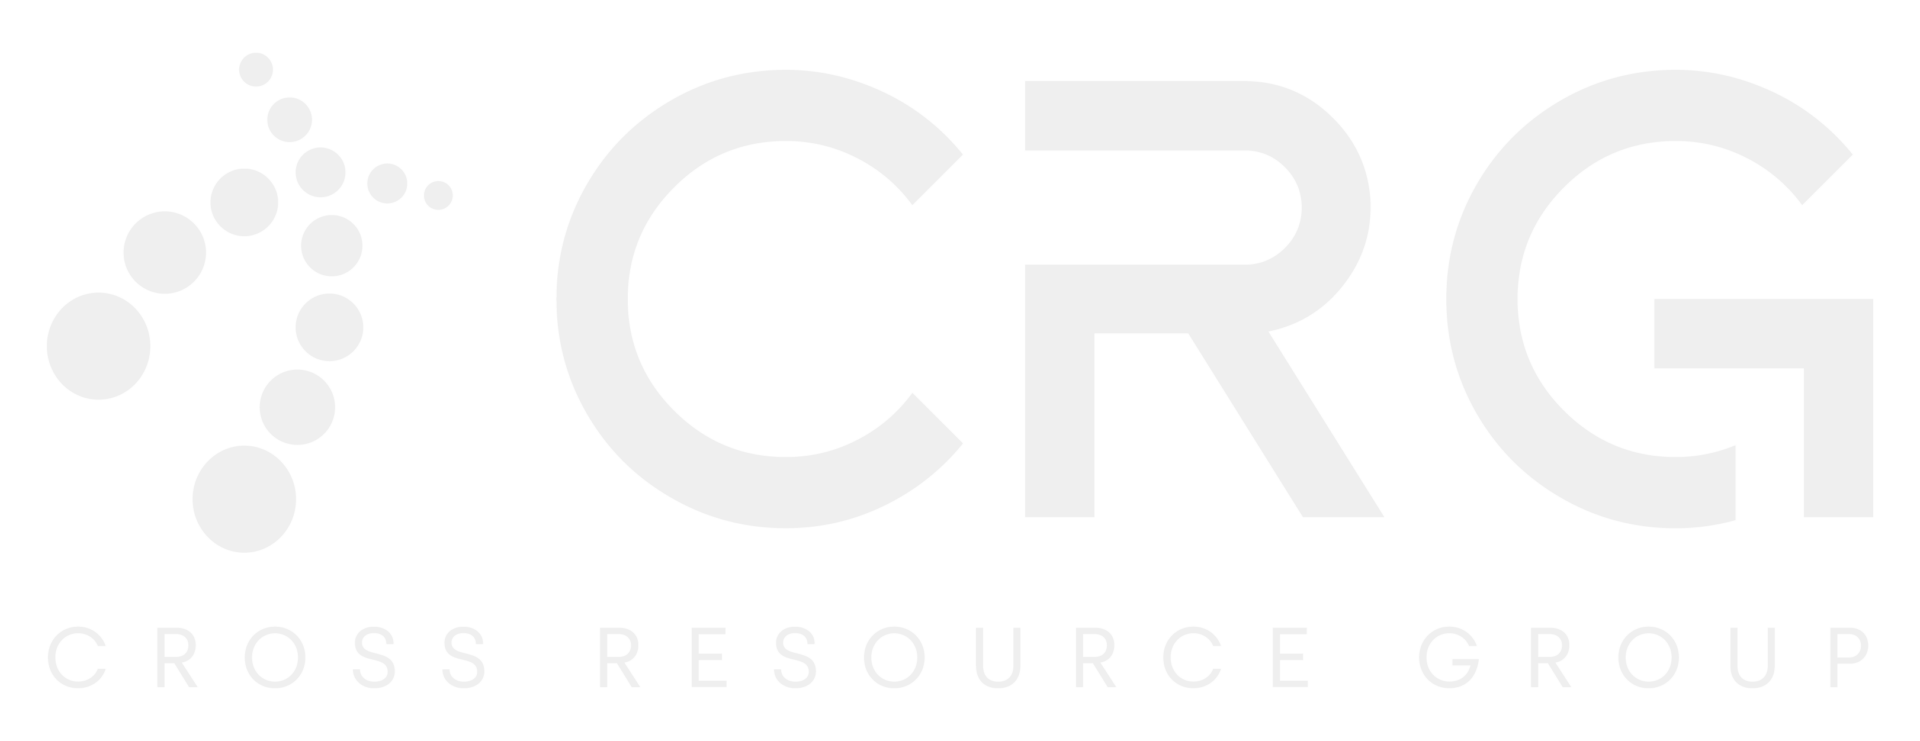 Light logo for Cross Resource Group